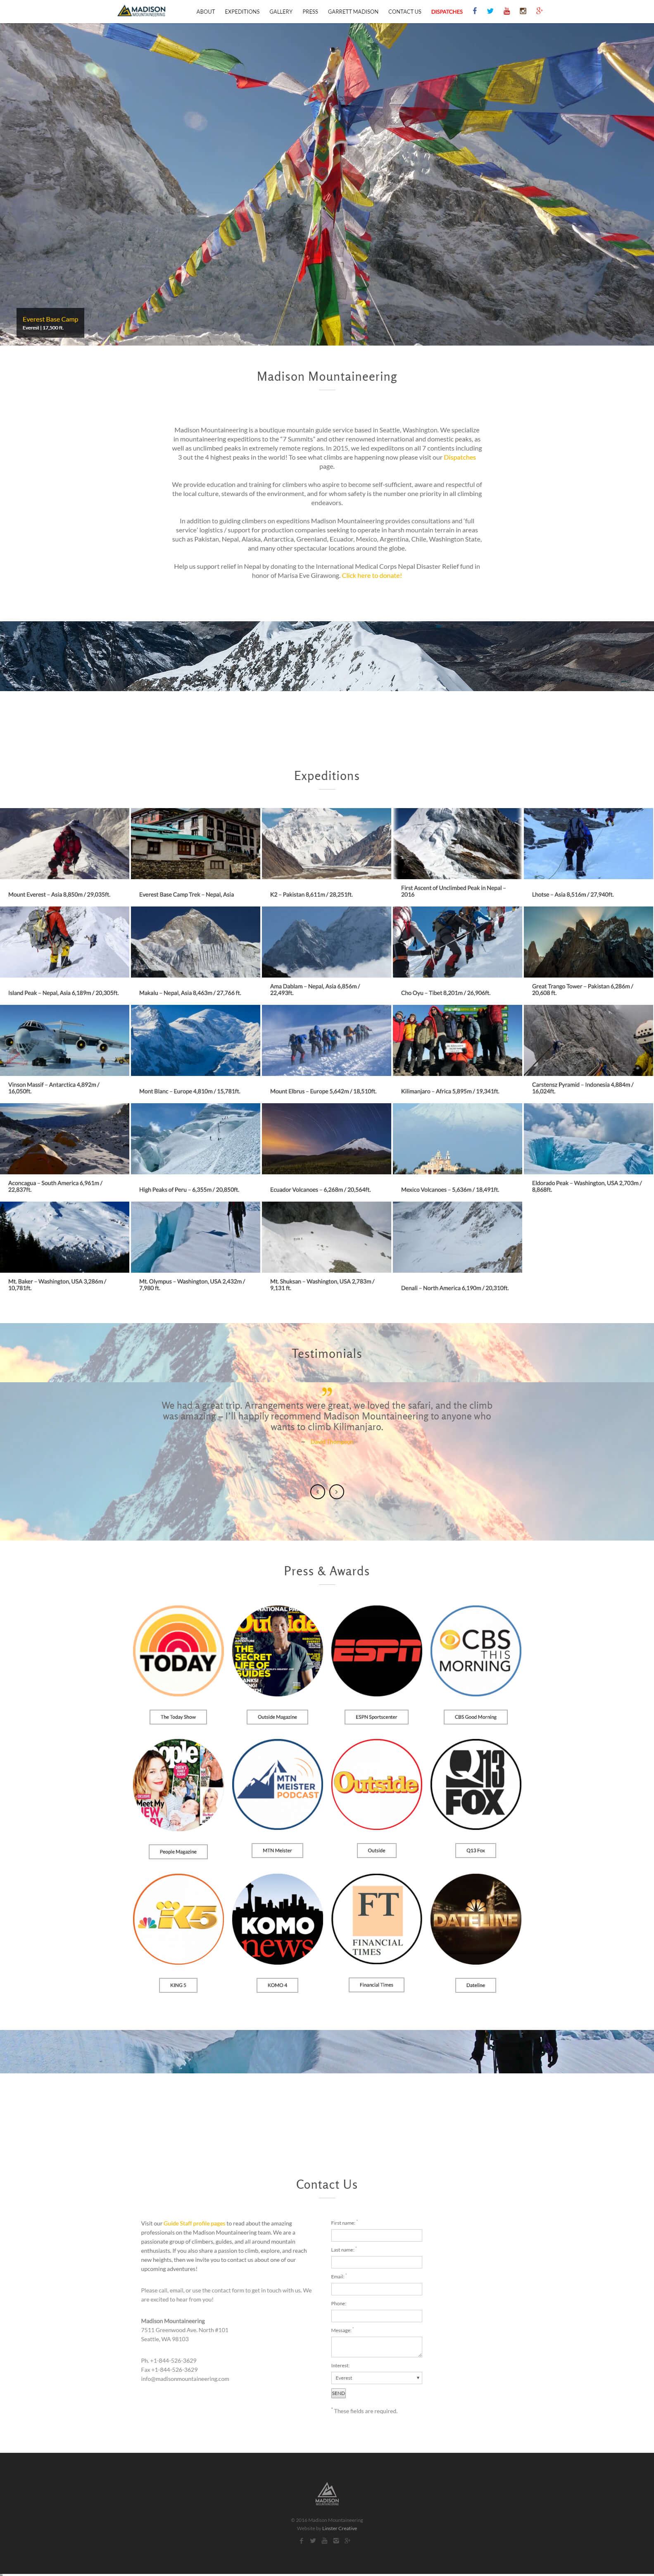 madison mountaineering website